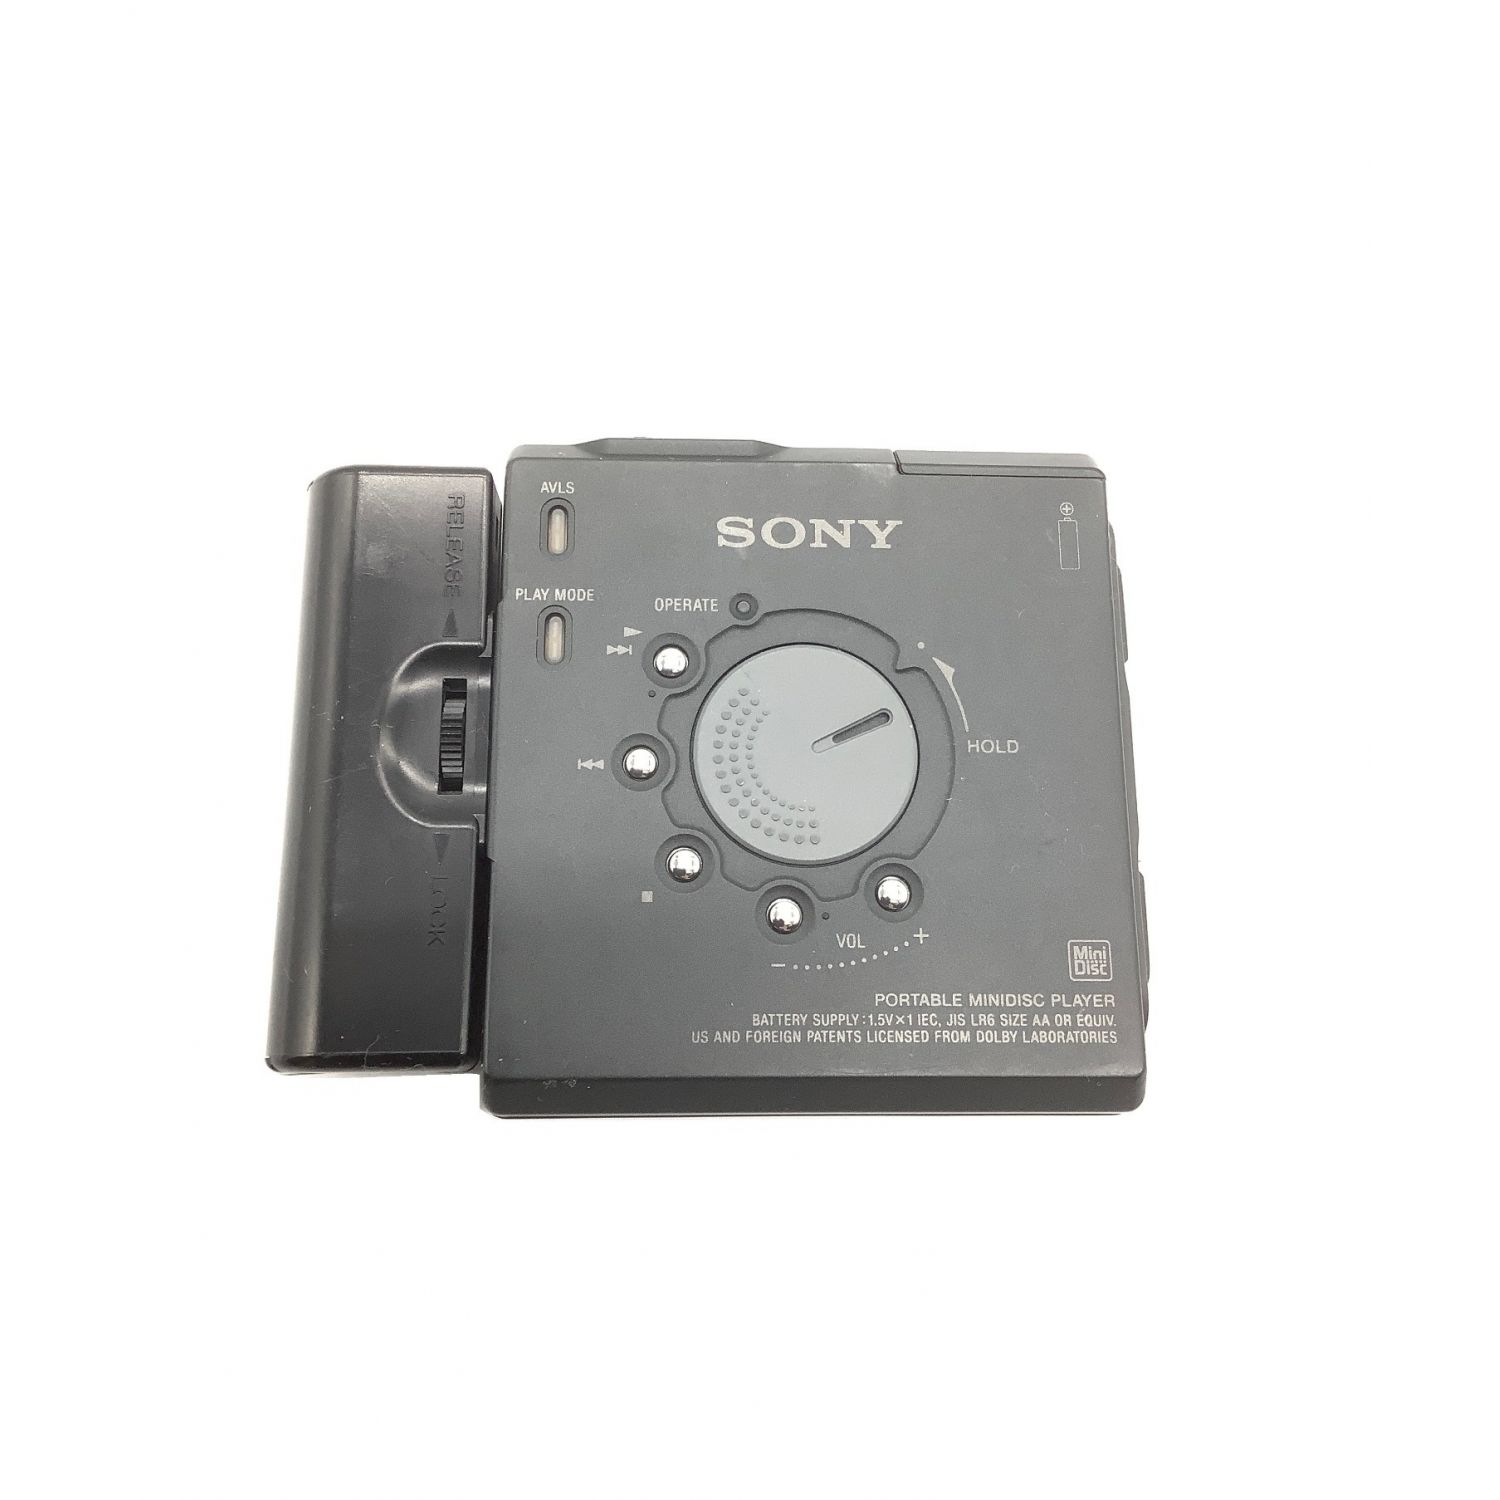 SONY (ソニー) ポータブルMDプレーヤー MZ-E500 電池駆動のみ動作確認 